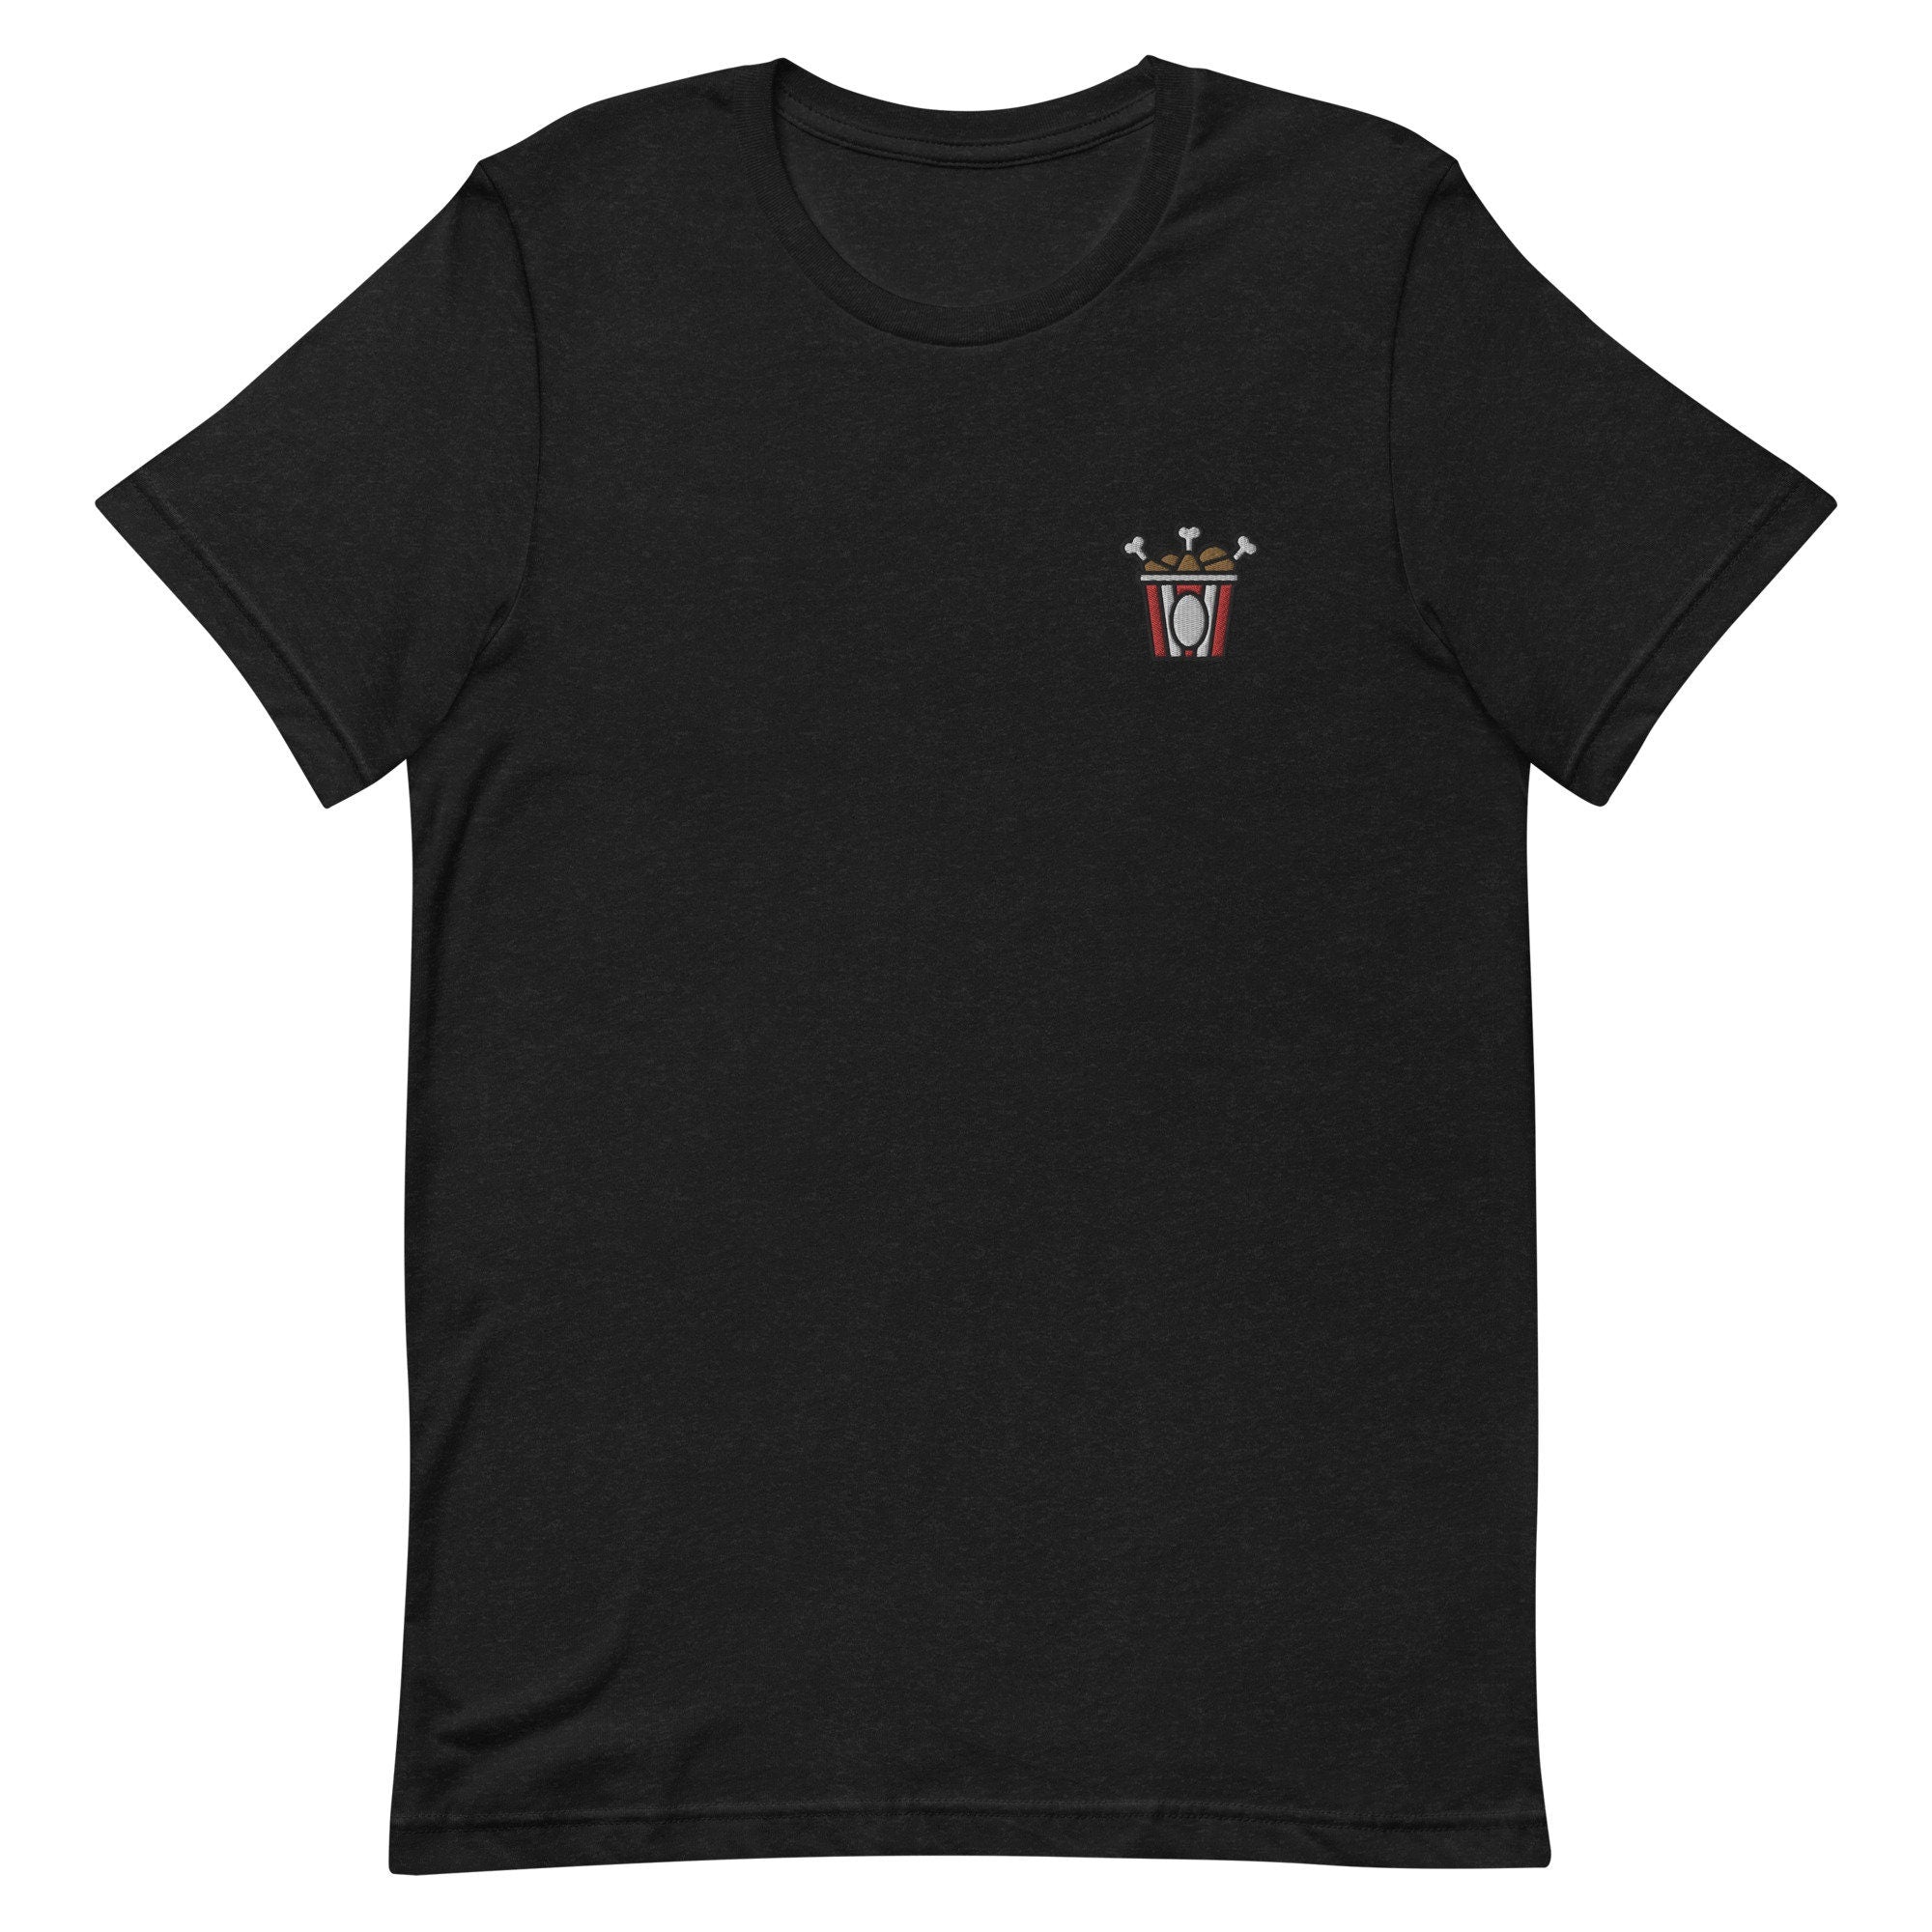 Bucket of Chicken Premium Men's T-Shirt, Embroidered Men's T-Shirt Gift for Boyfriend, Men's Short Sleeve Shirt - Multiple Colors